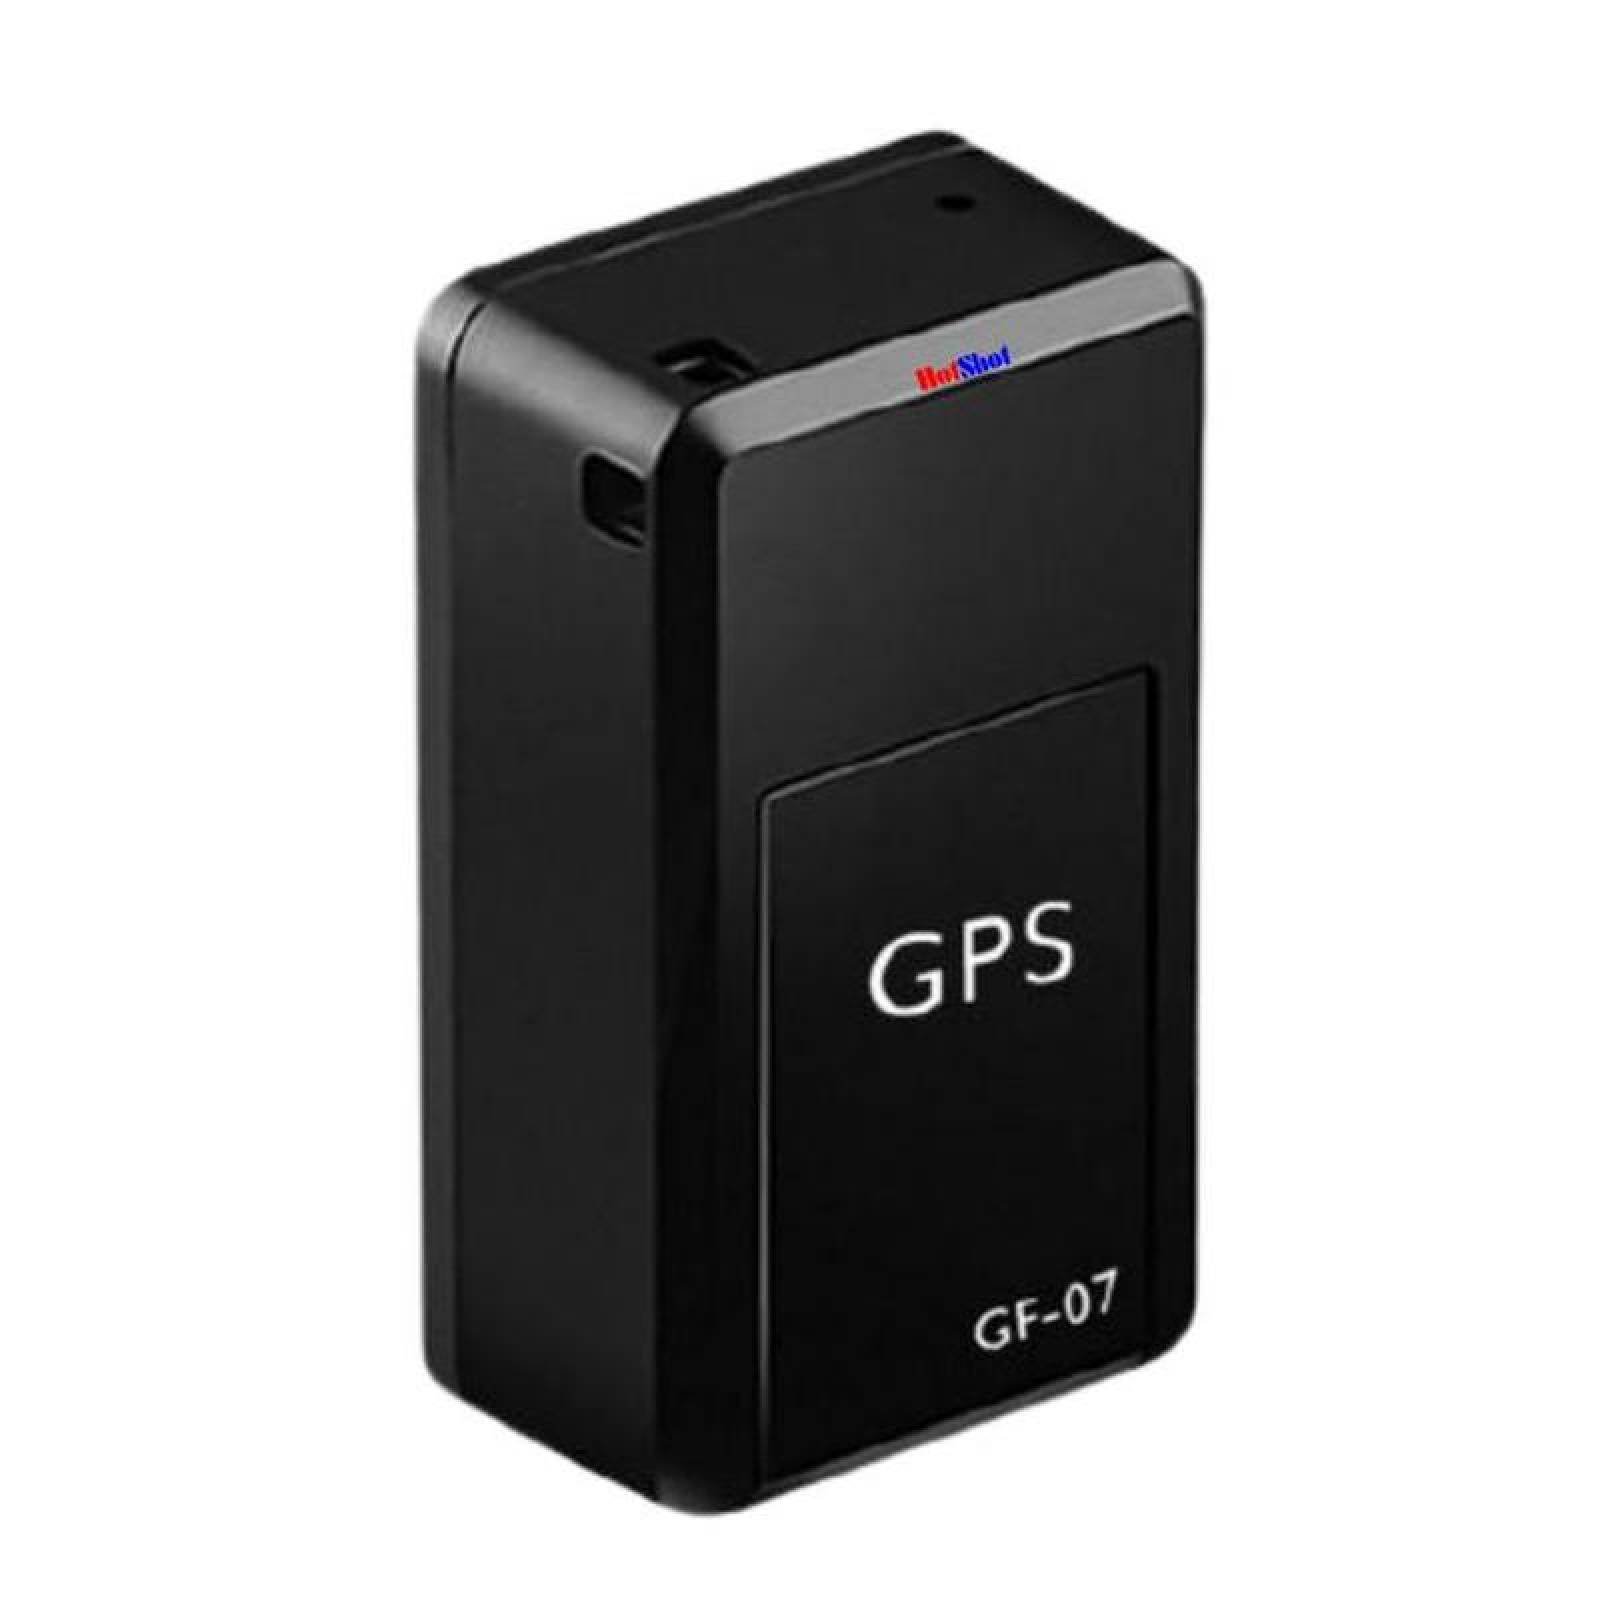 Mini Localizador Rastreador GPS Satelital Magnetico Microfono